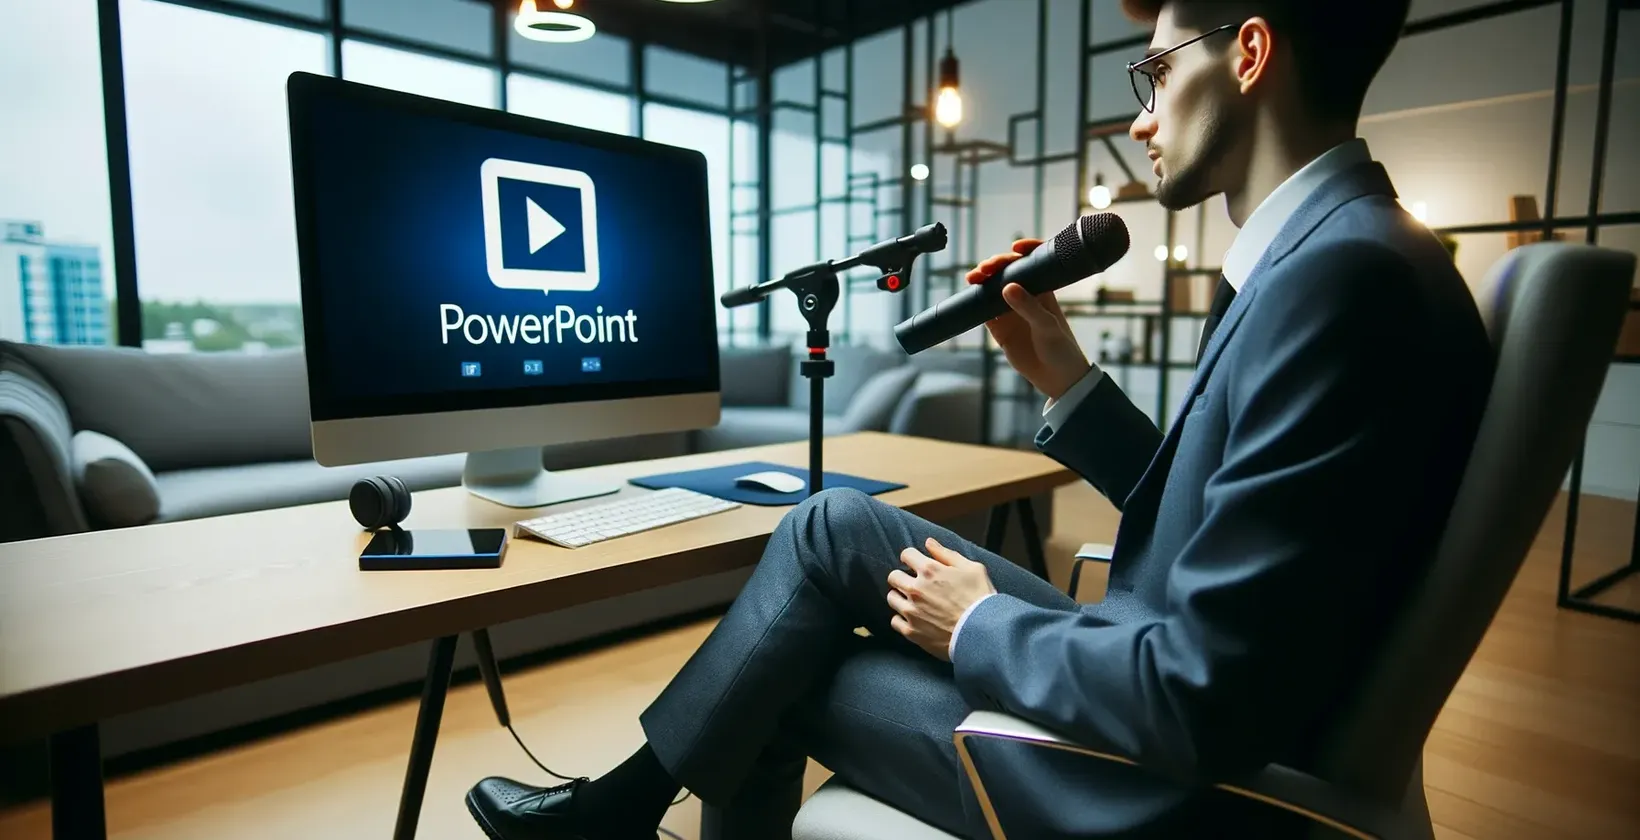 Pria di kantor dengan mikrofon melihat ke monitor yang menampilkan logo PowerPoint.